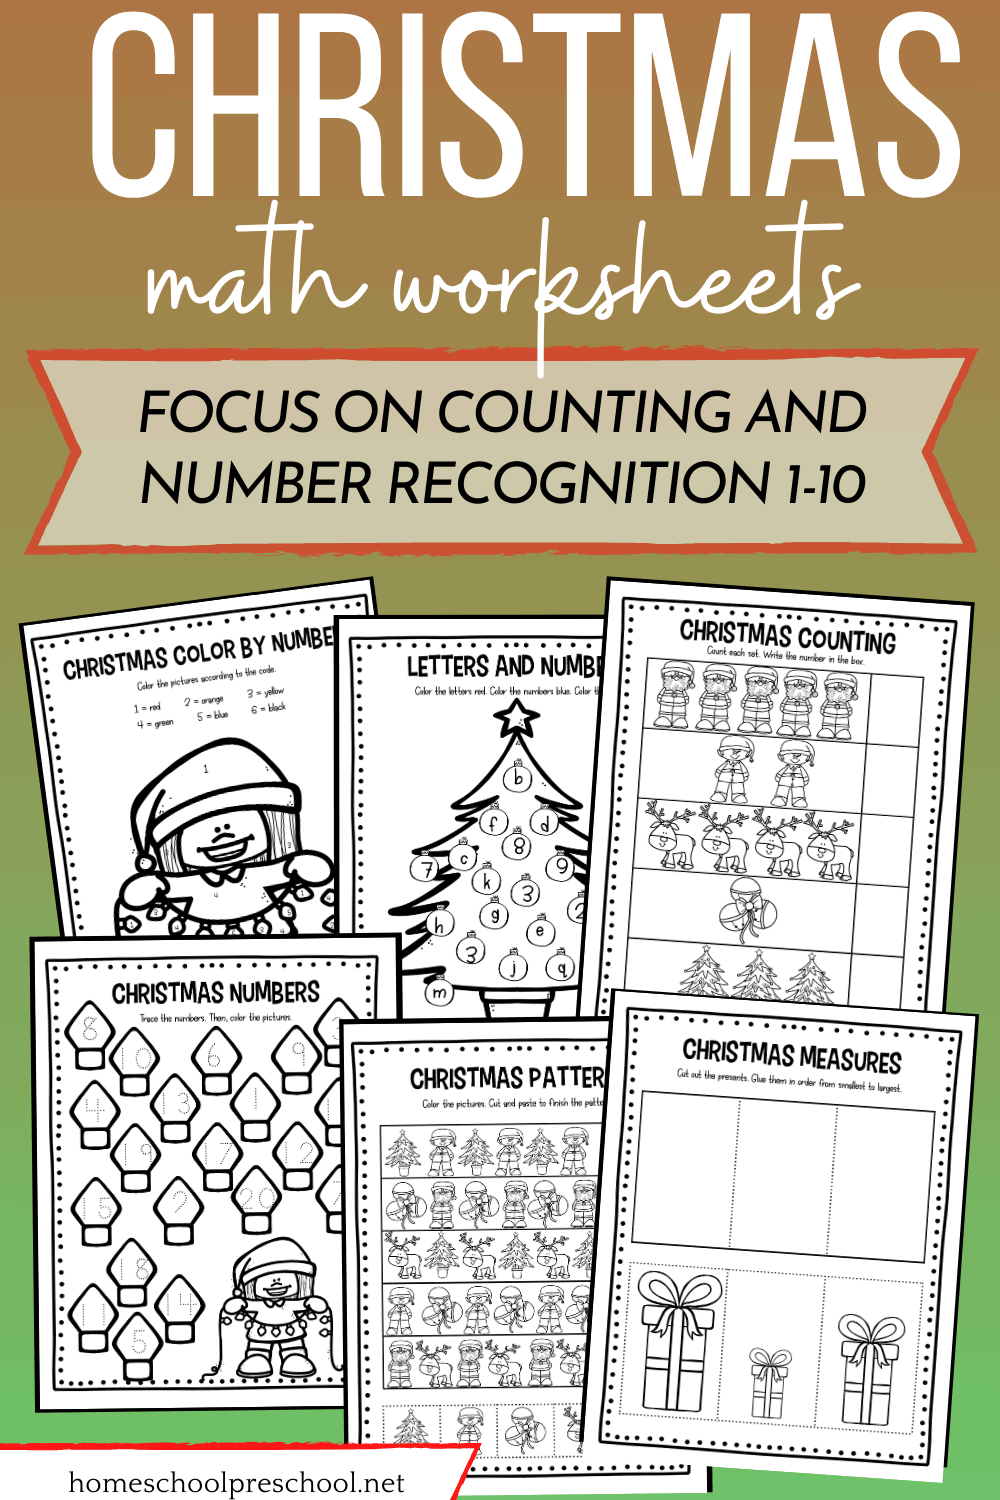 free-christmas-math-worksheets-for-preschoolers-alphabetworksheetsfree